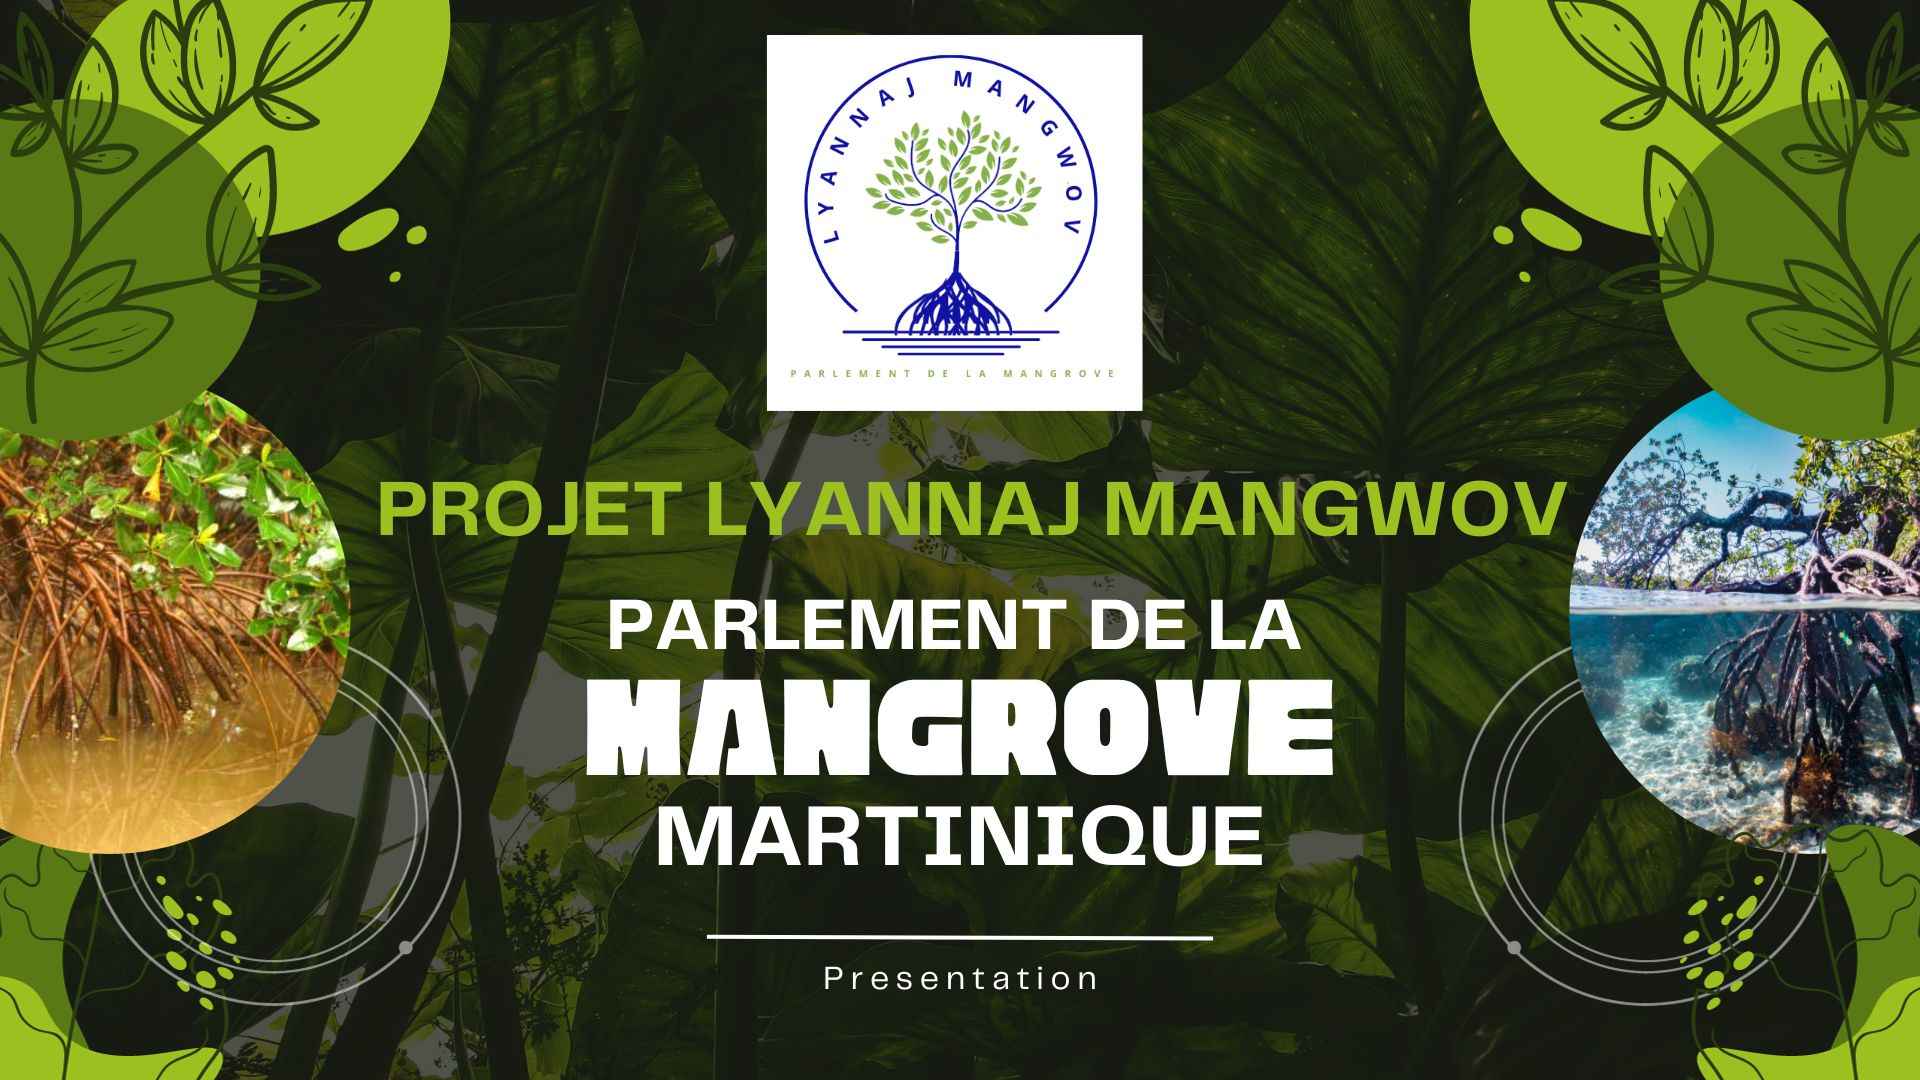 PRESENTATION LYANNAJ MANGWOV - Parlement de la Mangrove.jpg
